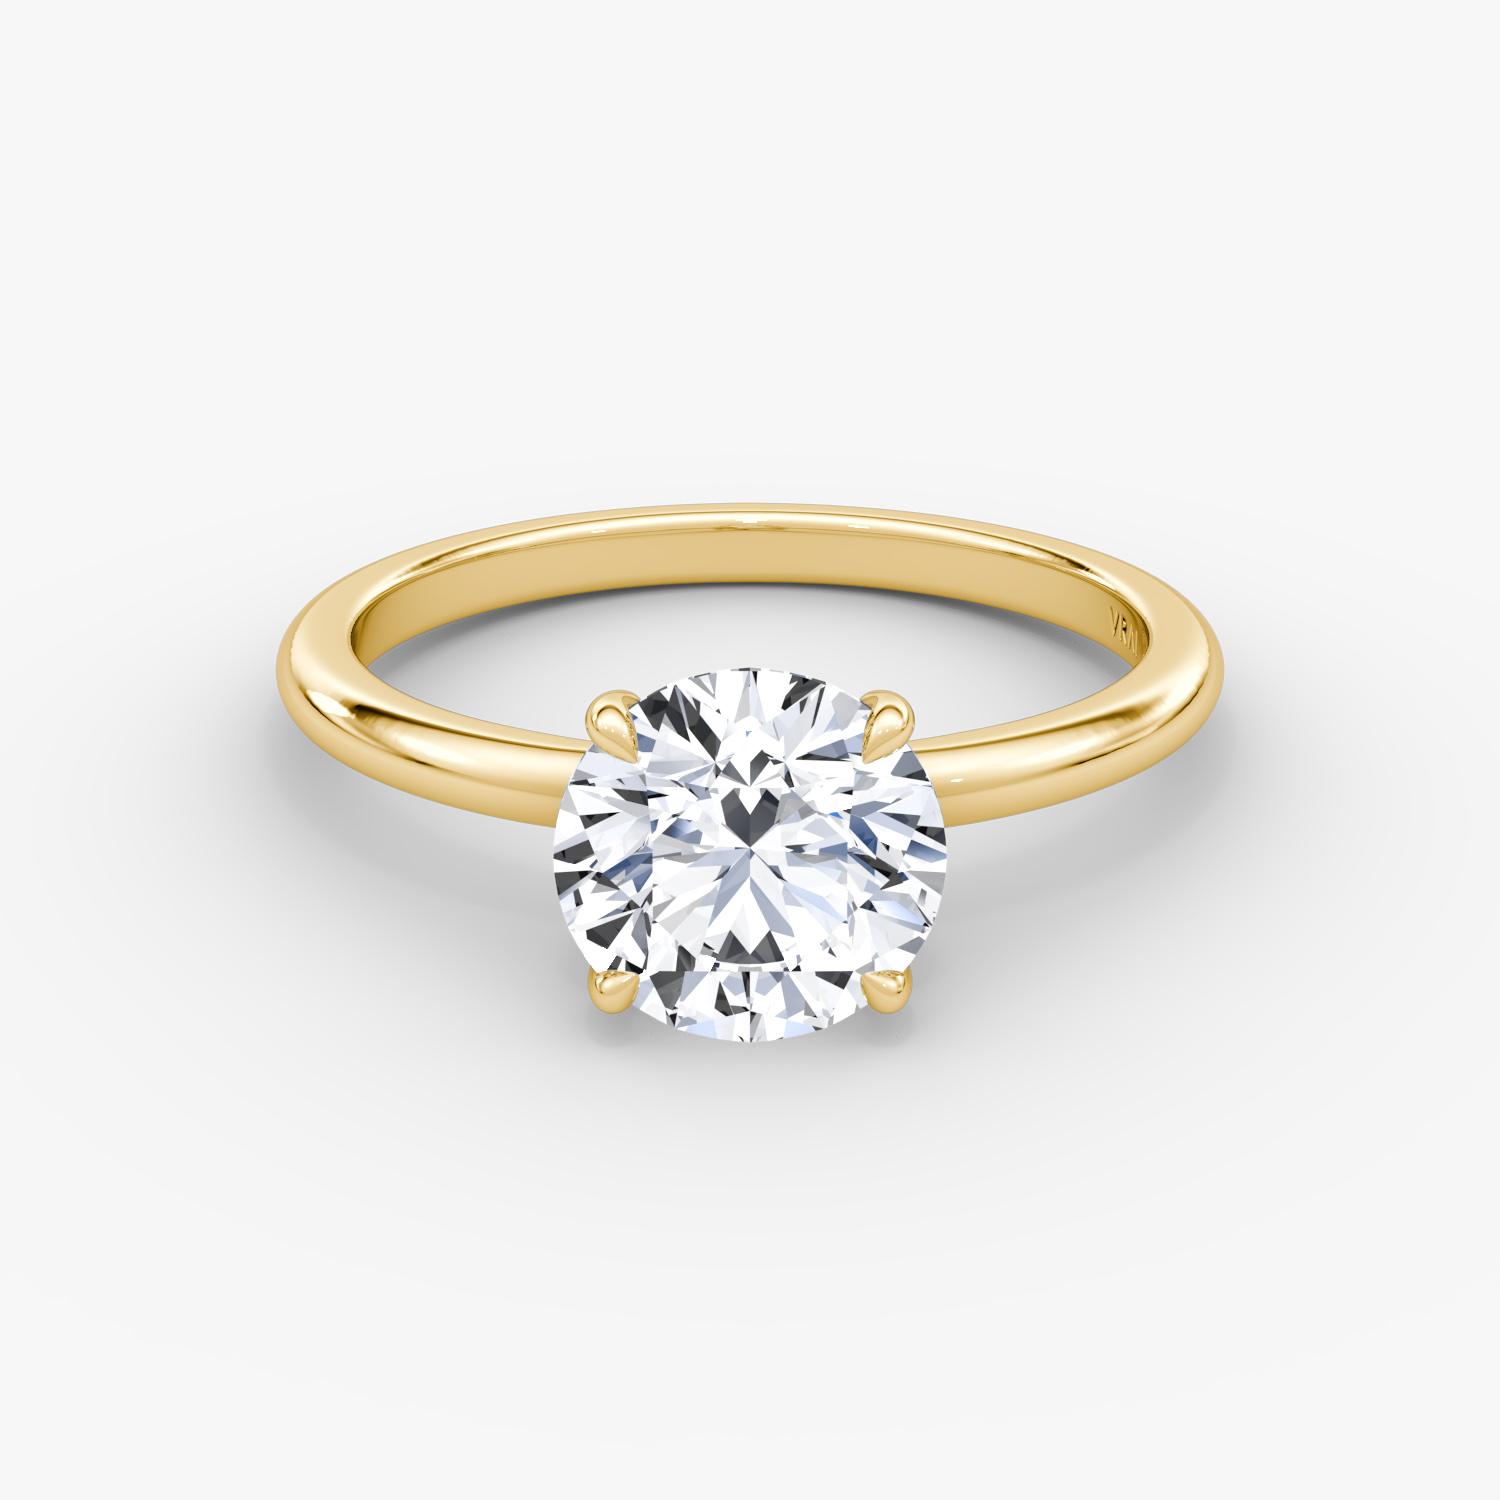 Your Guide to Buying 4 Carat Diamond Rings | Whiteflash